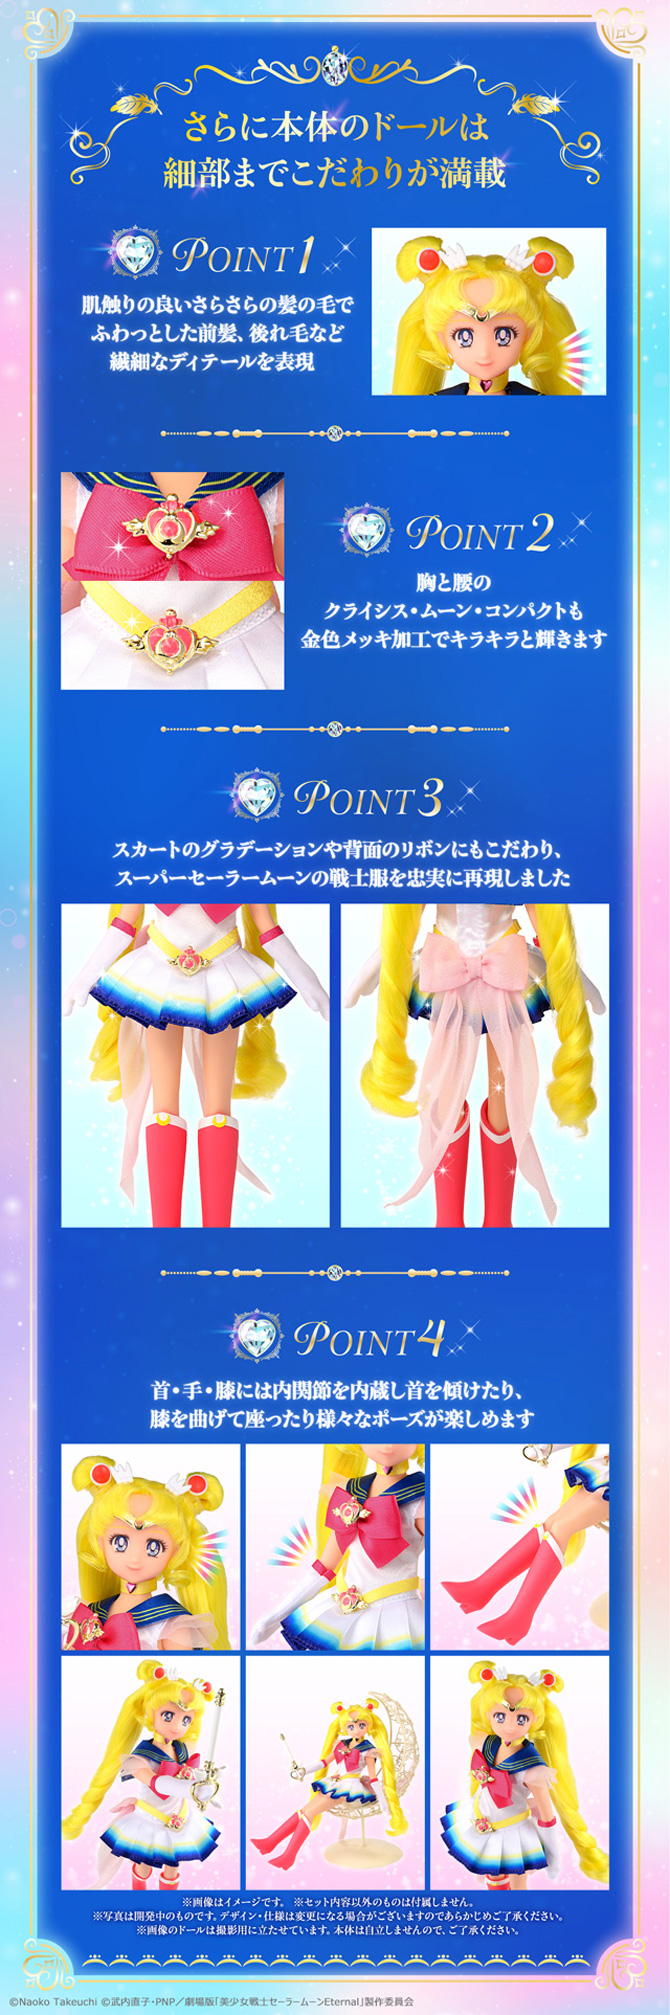 StyleDoll Super Sailor Moon：美少女戦士セーラームーン 30周年